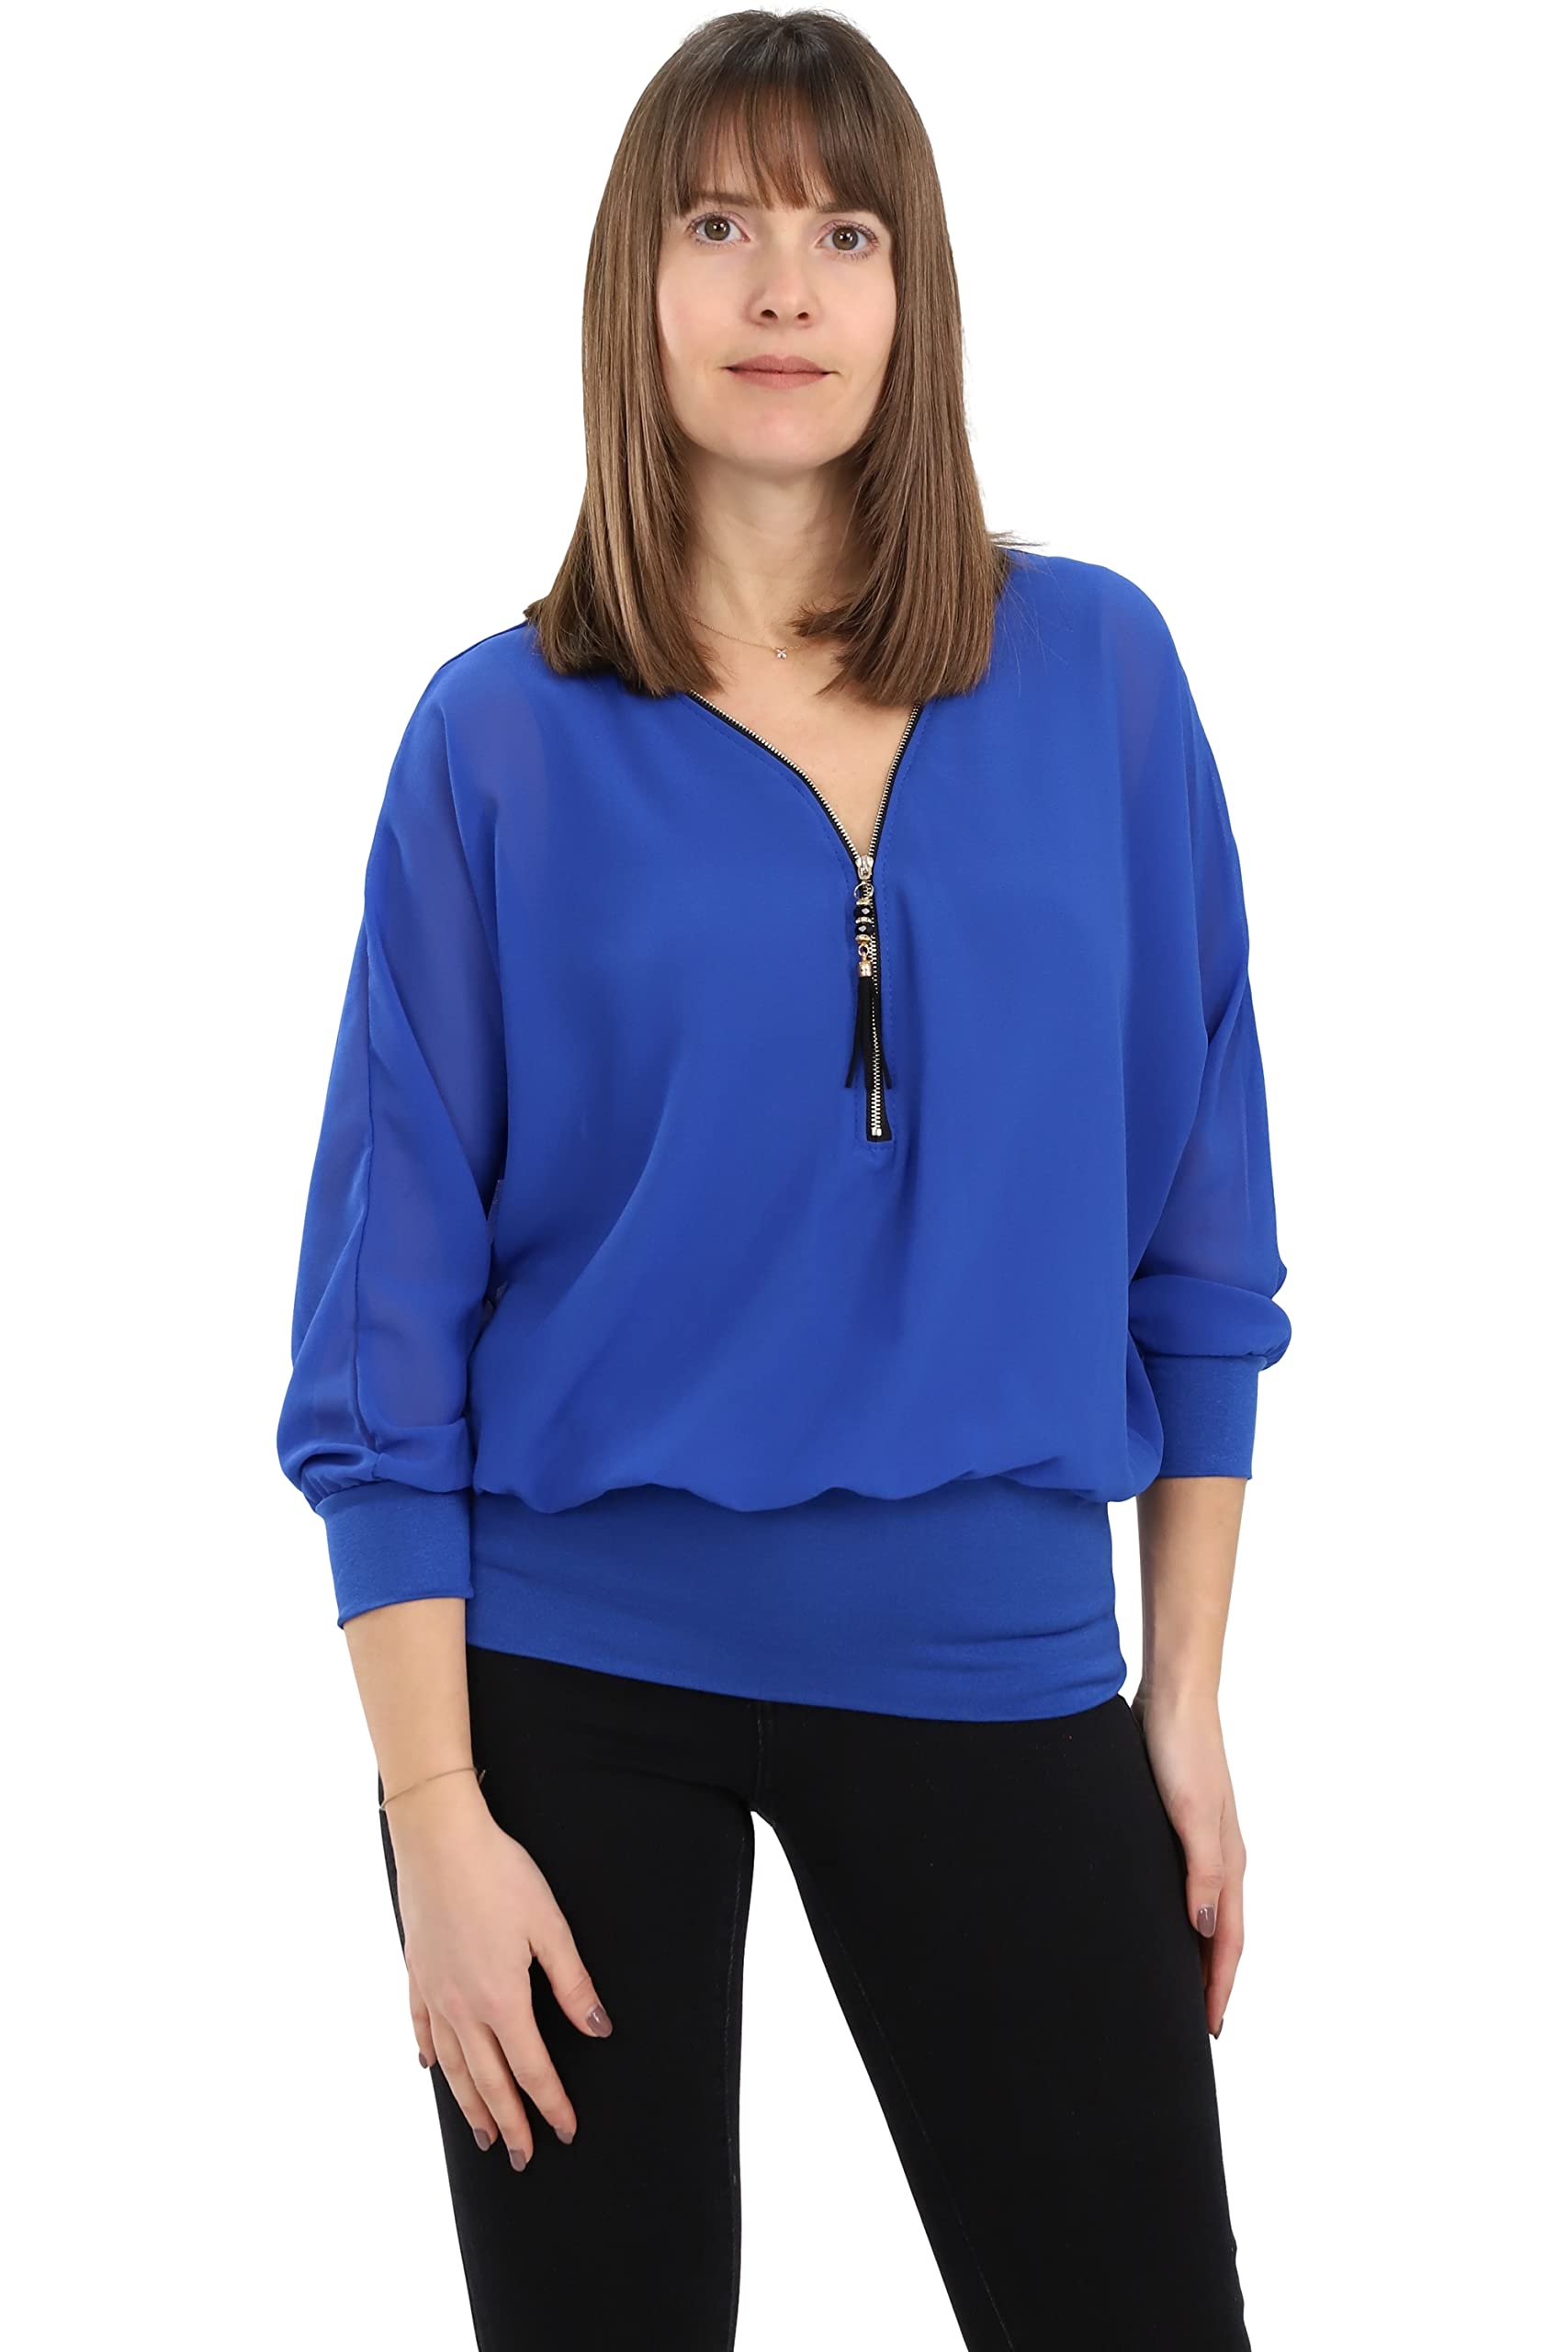 Malito Damen Bluse im Fledermaus Look | Tunika mit Zipper | Kurzarm Blusenshirt mit breitem Bund | Elegant - Shirt 6297 (Royalblau)